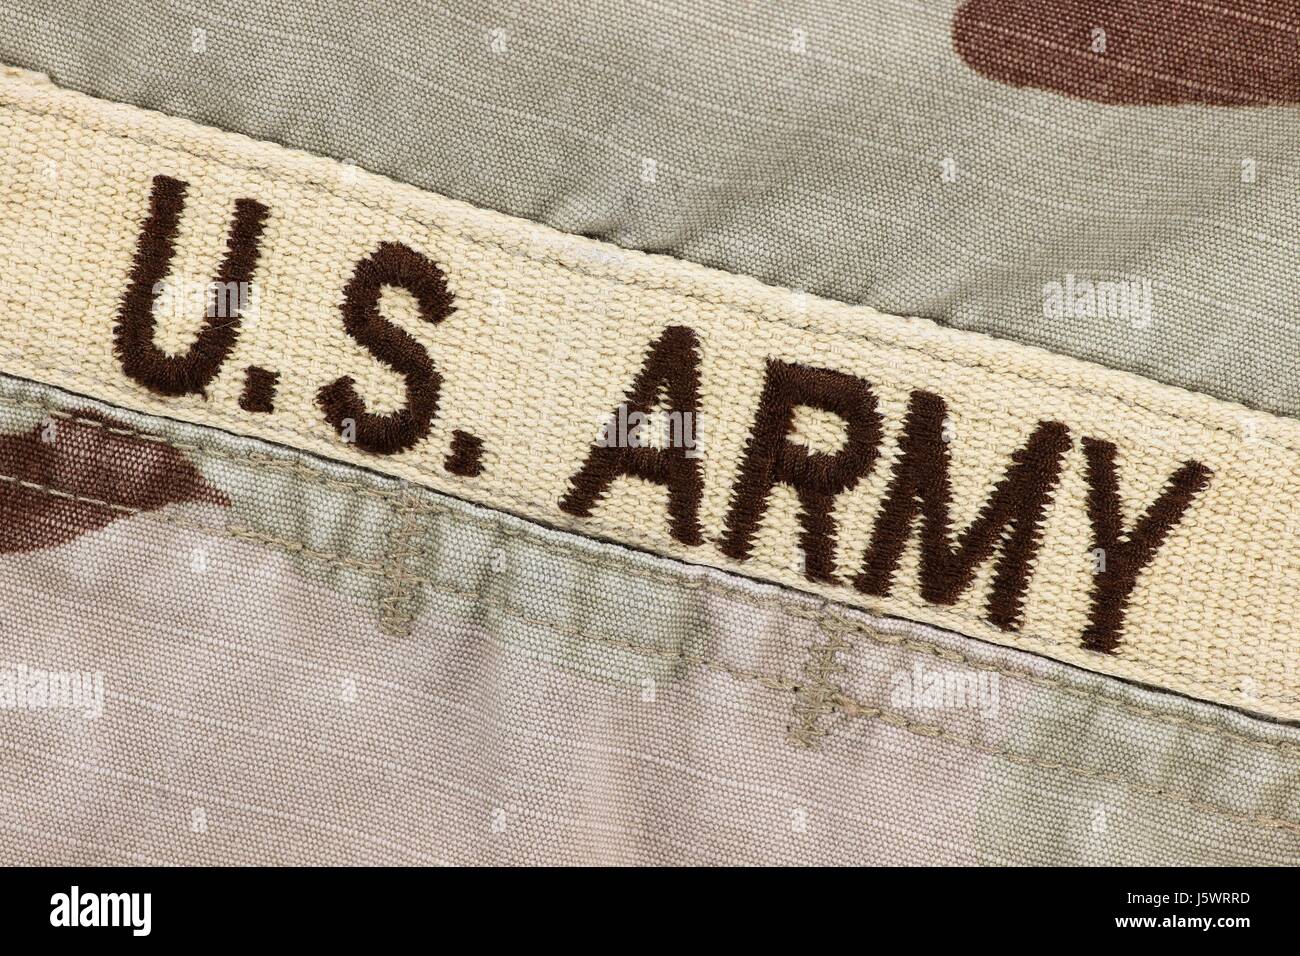 U.S. Army patch on desert uniform Stock Photo